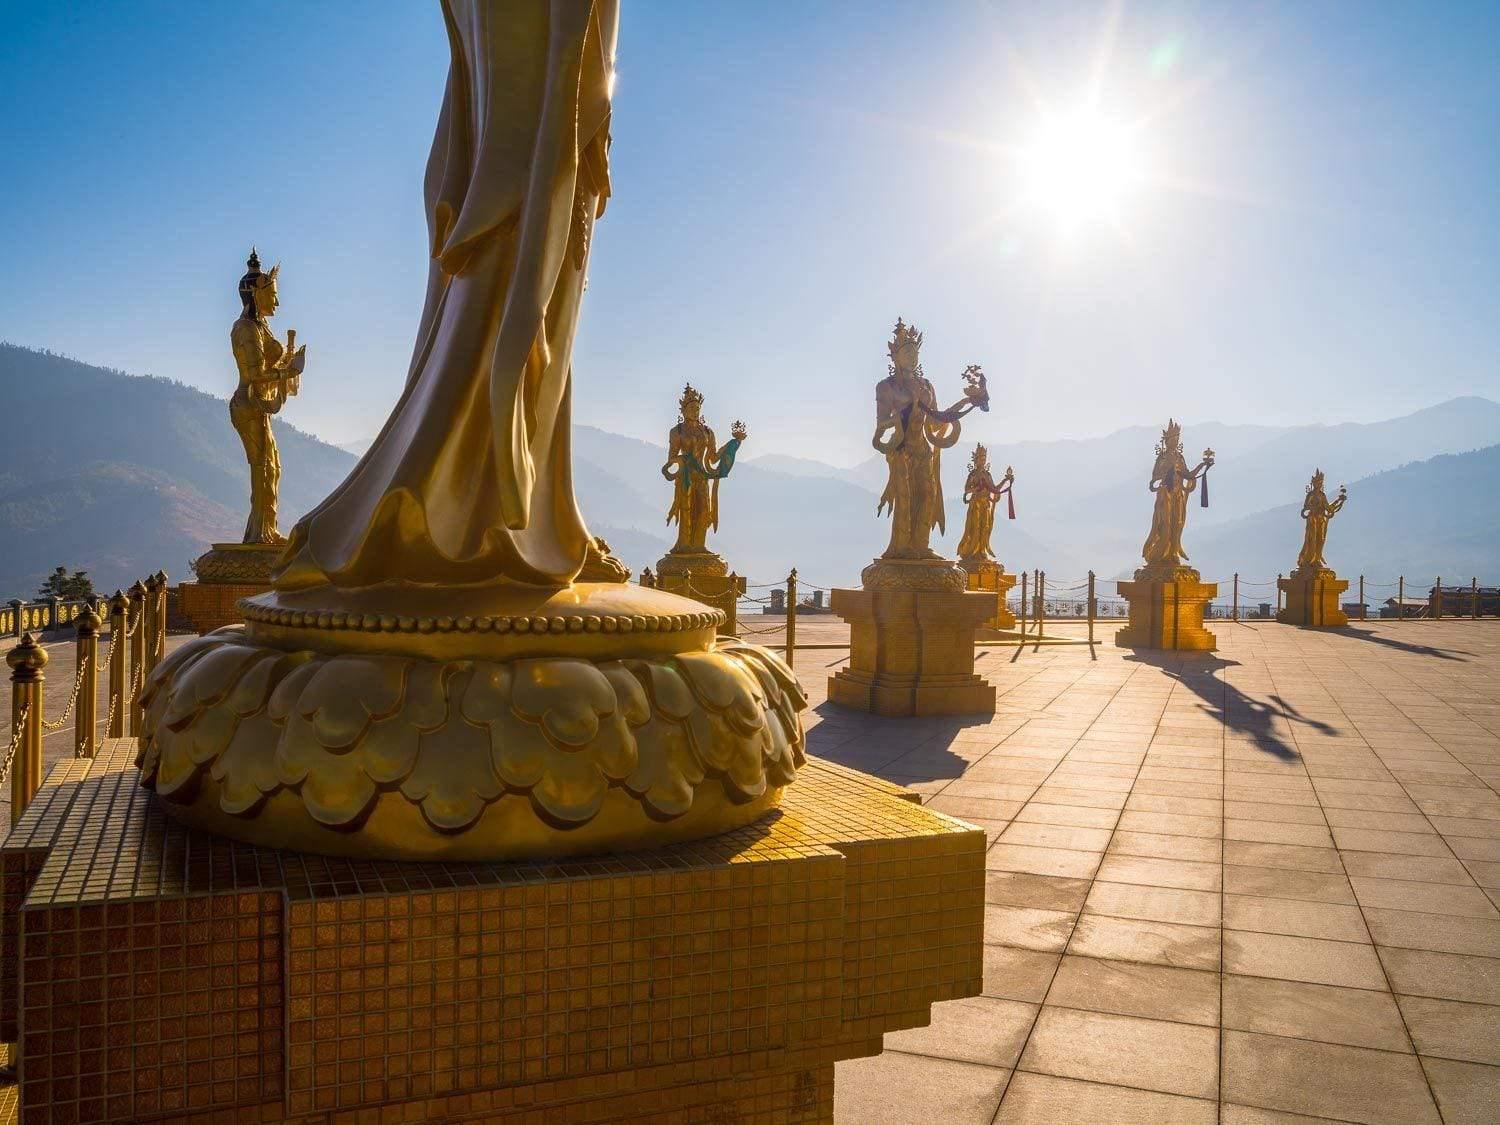 Group of golden standing statues, Golden Statues #2, Bhutan